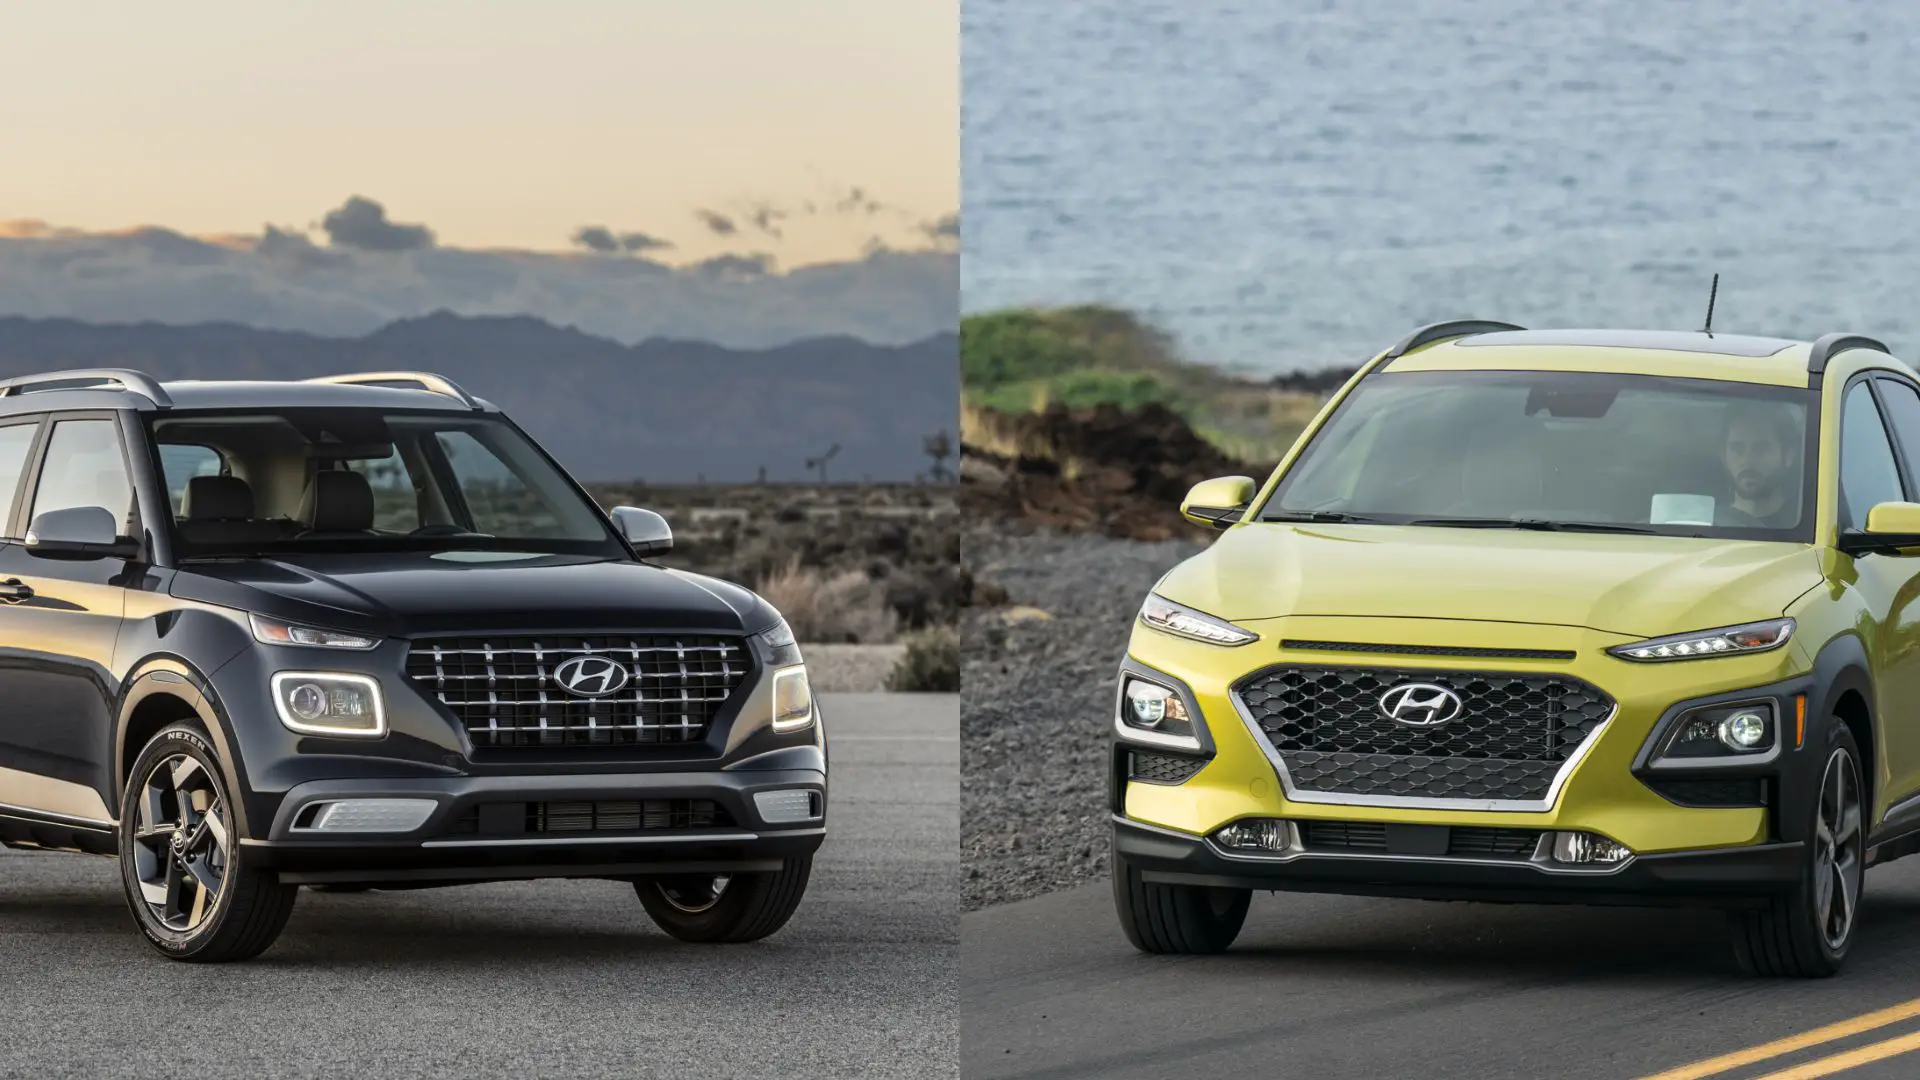 Hyundai Venue vs Kona comparison